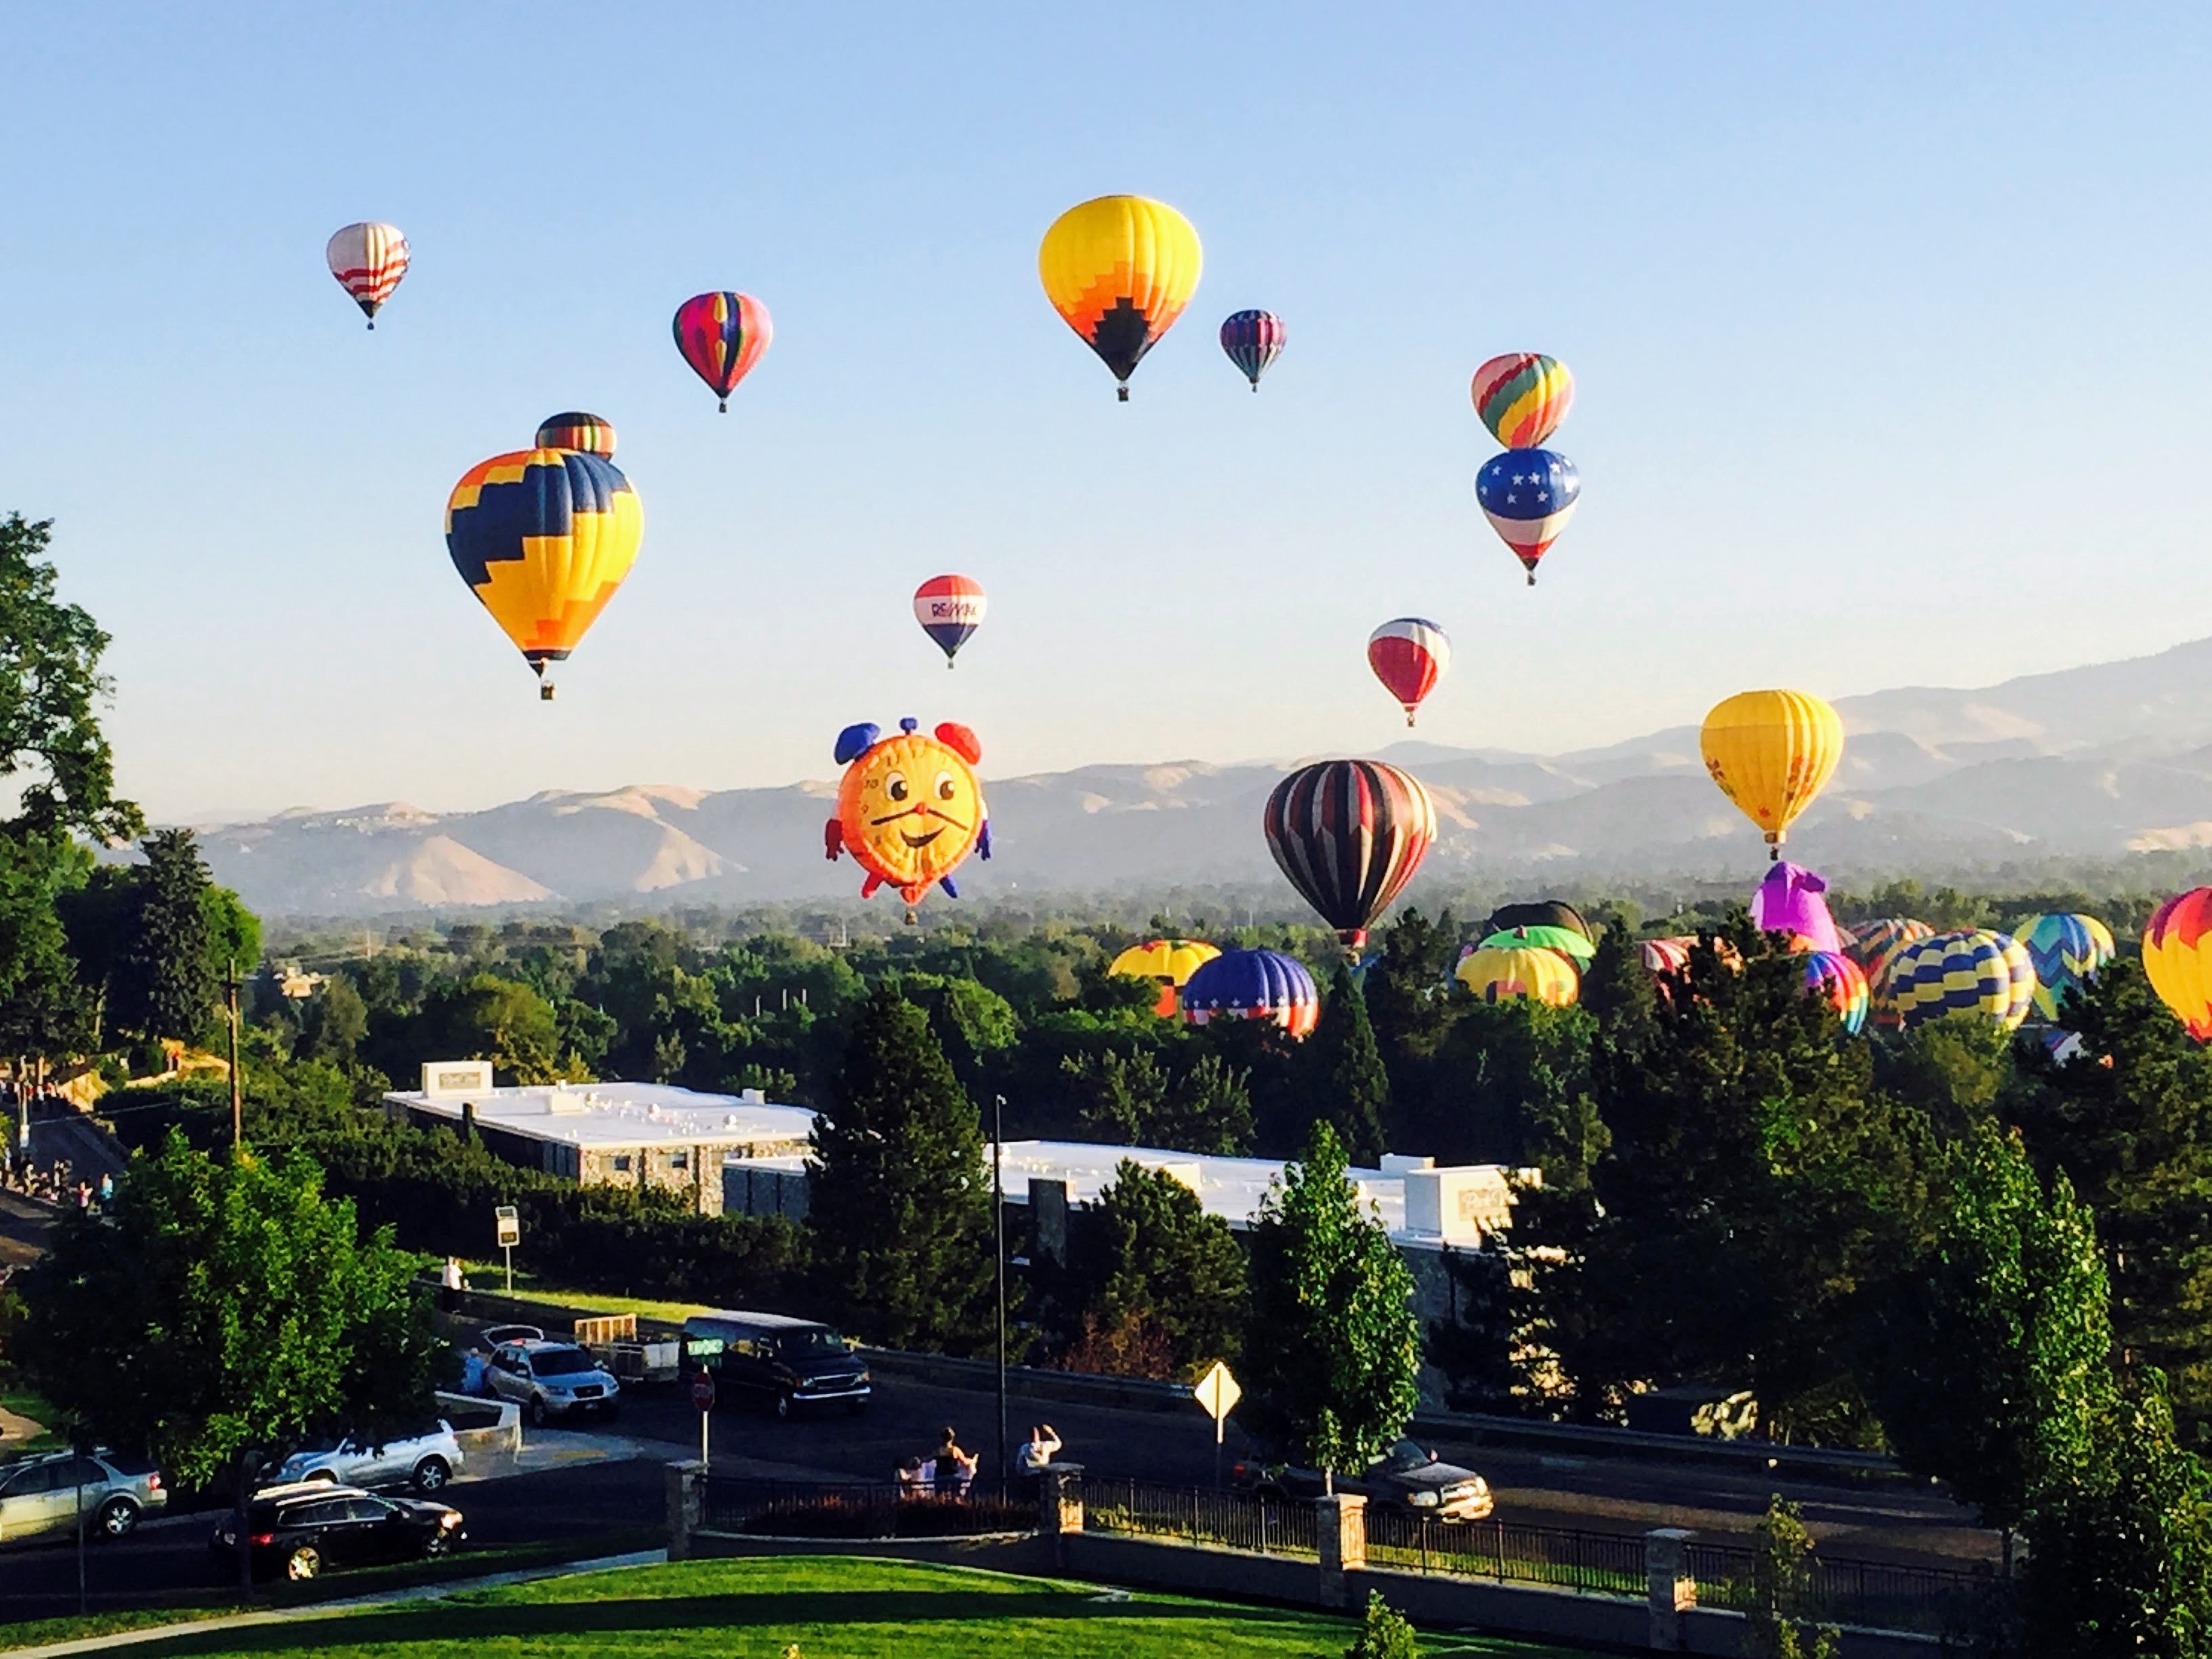 September Balloon Festival in Boise, Idaho
#GreatOutdoors